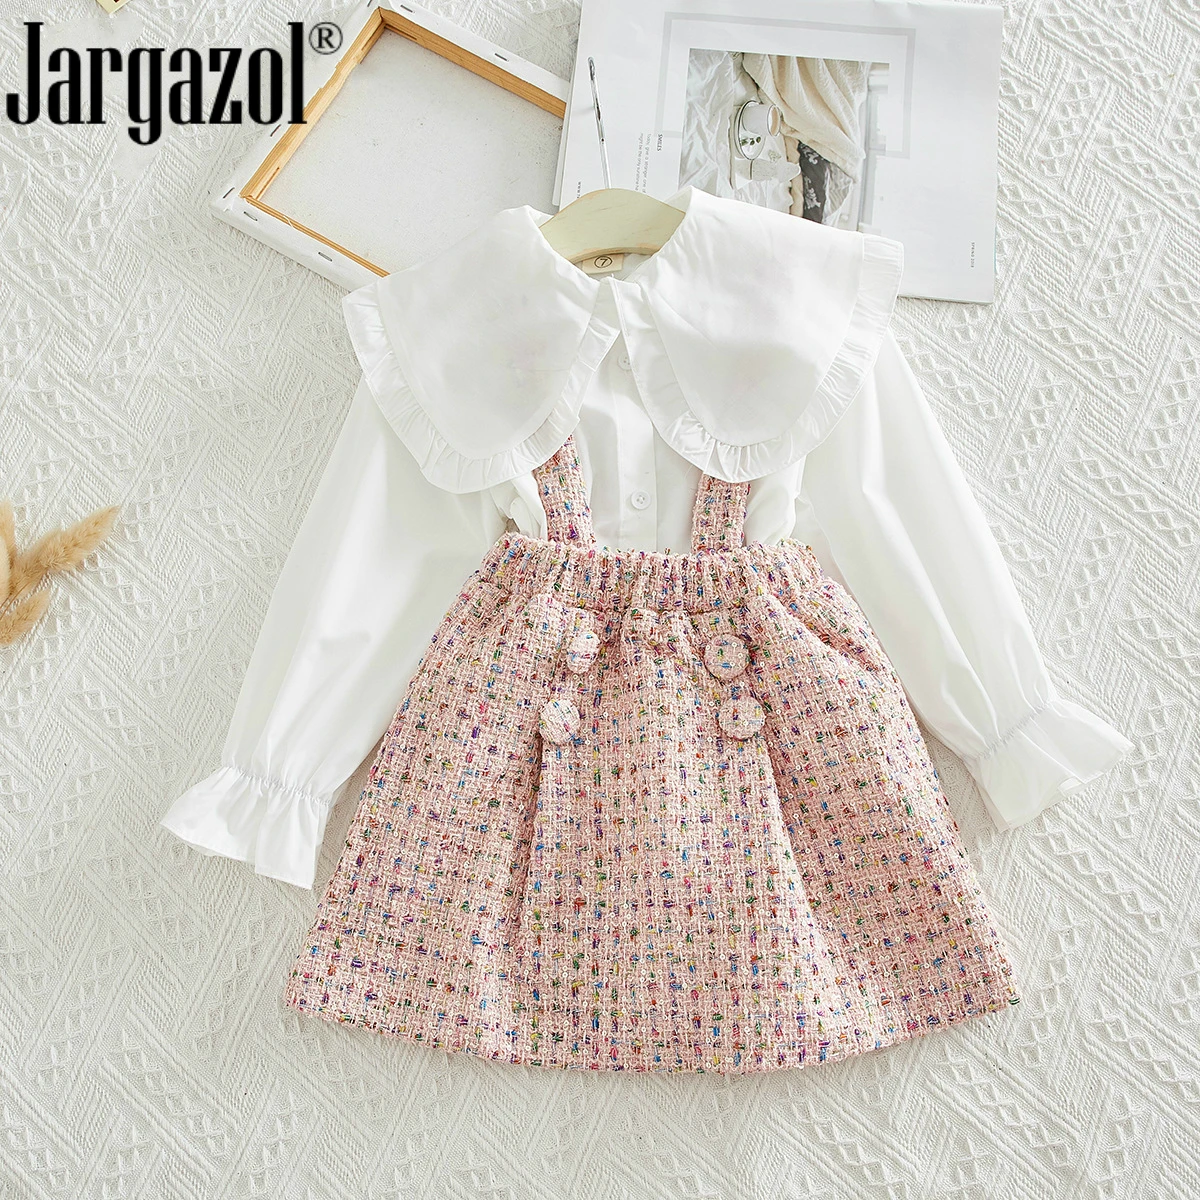 Fabal 2pcs Kids Baby Girl Tops T-shirt+Skirt Overalls Strap Dress Outfits Set Clothes